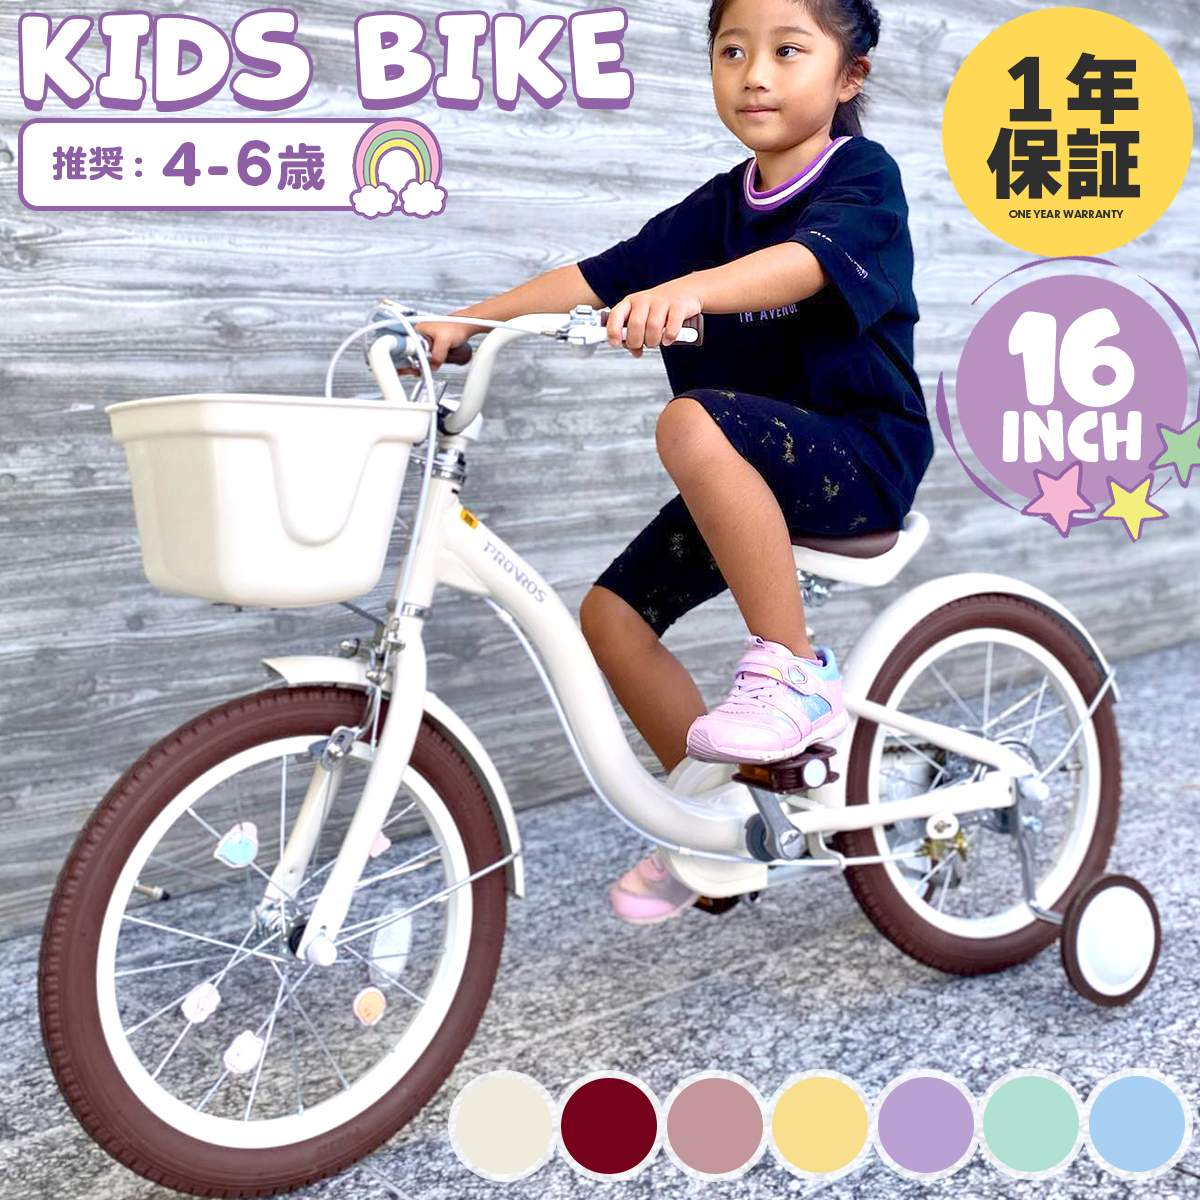 PROVROS 子供用自転車 補助輪付き 16インチ キッズ 幼児 4歳 5歳 6歳 カゴ ギフト 女の子 お洒落 誕生日 クリスマス PKU-16